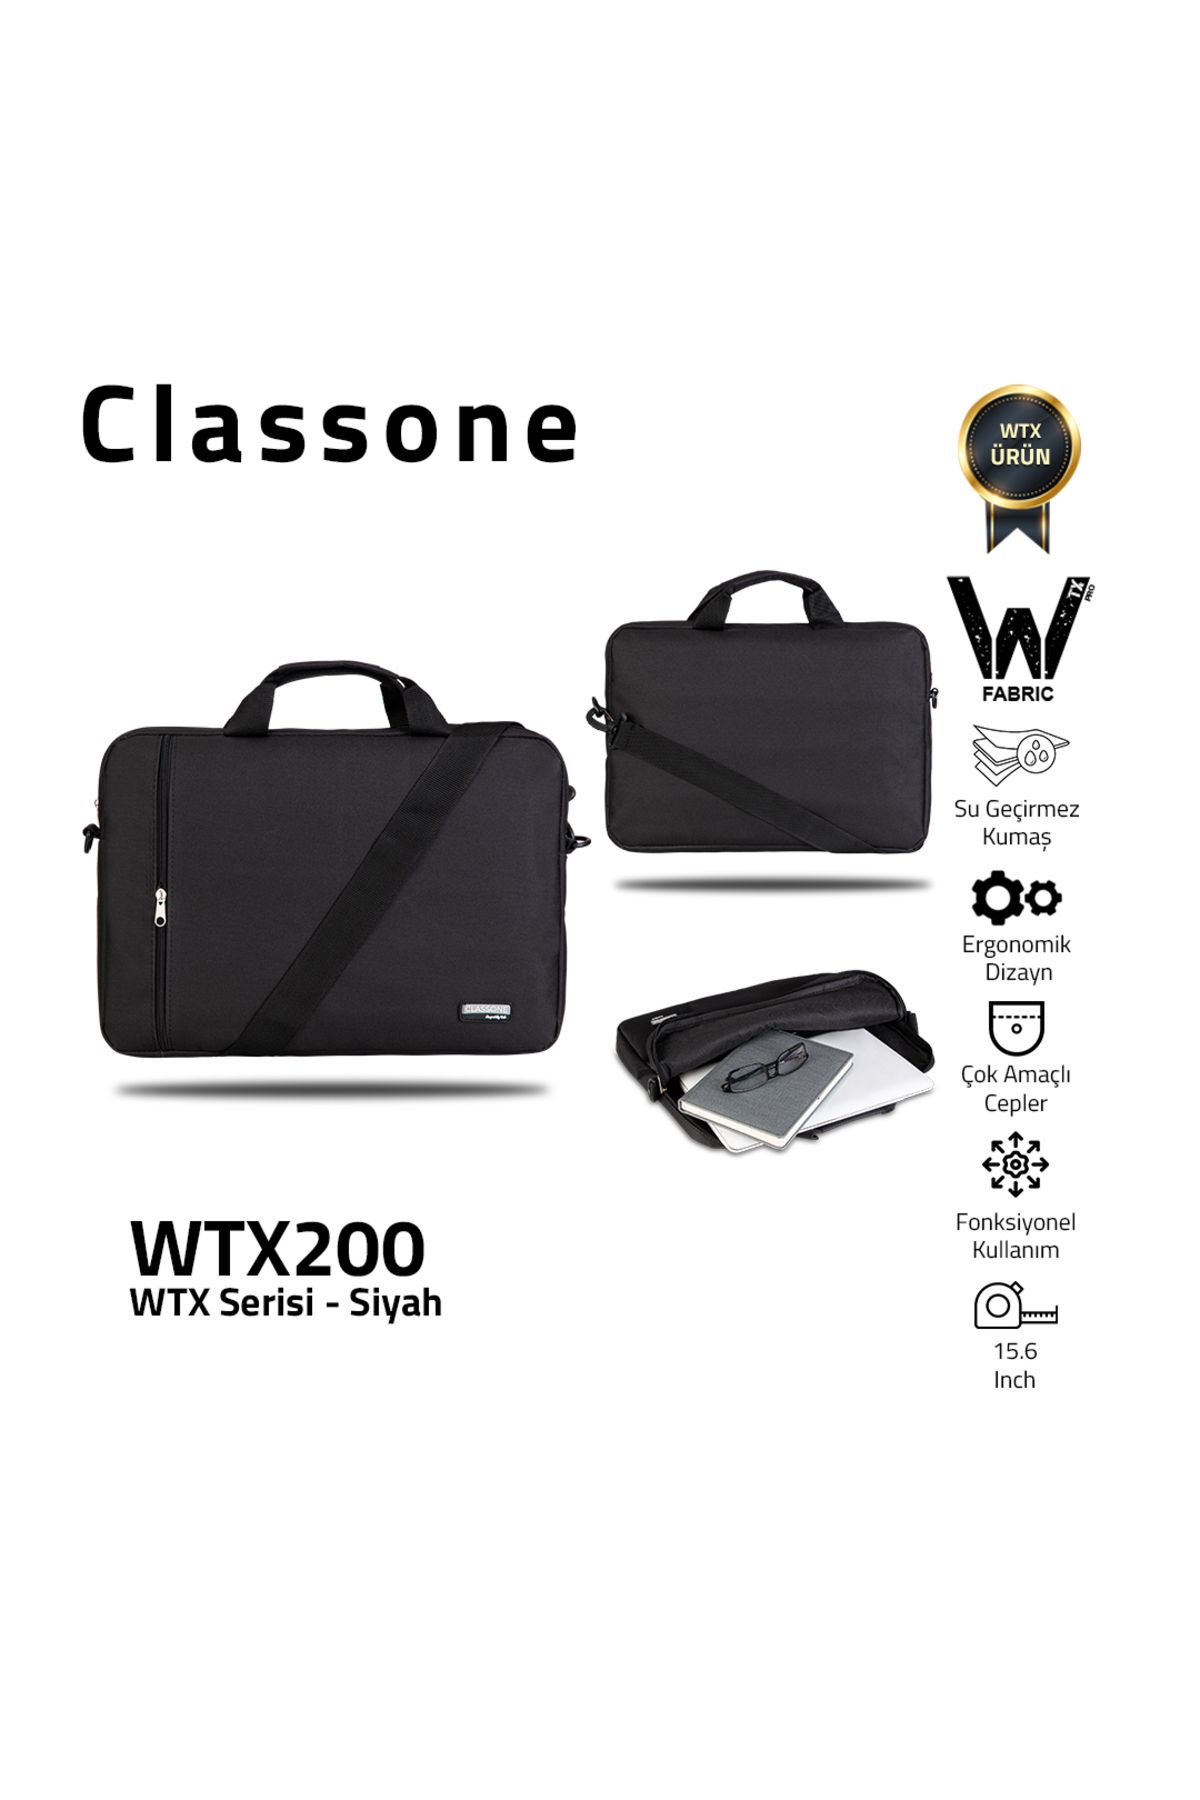 Classone Wtx200 Wtxpro Su Geçirmez Kumaş 15.6 Inch Uyumlu Macbook, Laptop , Notebook El Çantası- Siyah